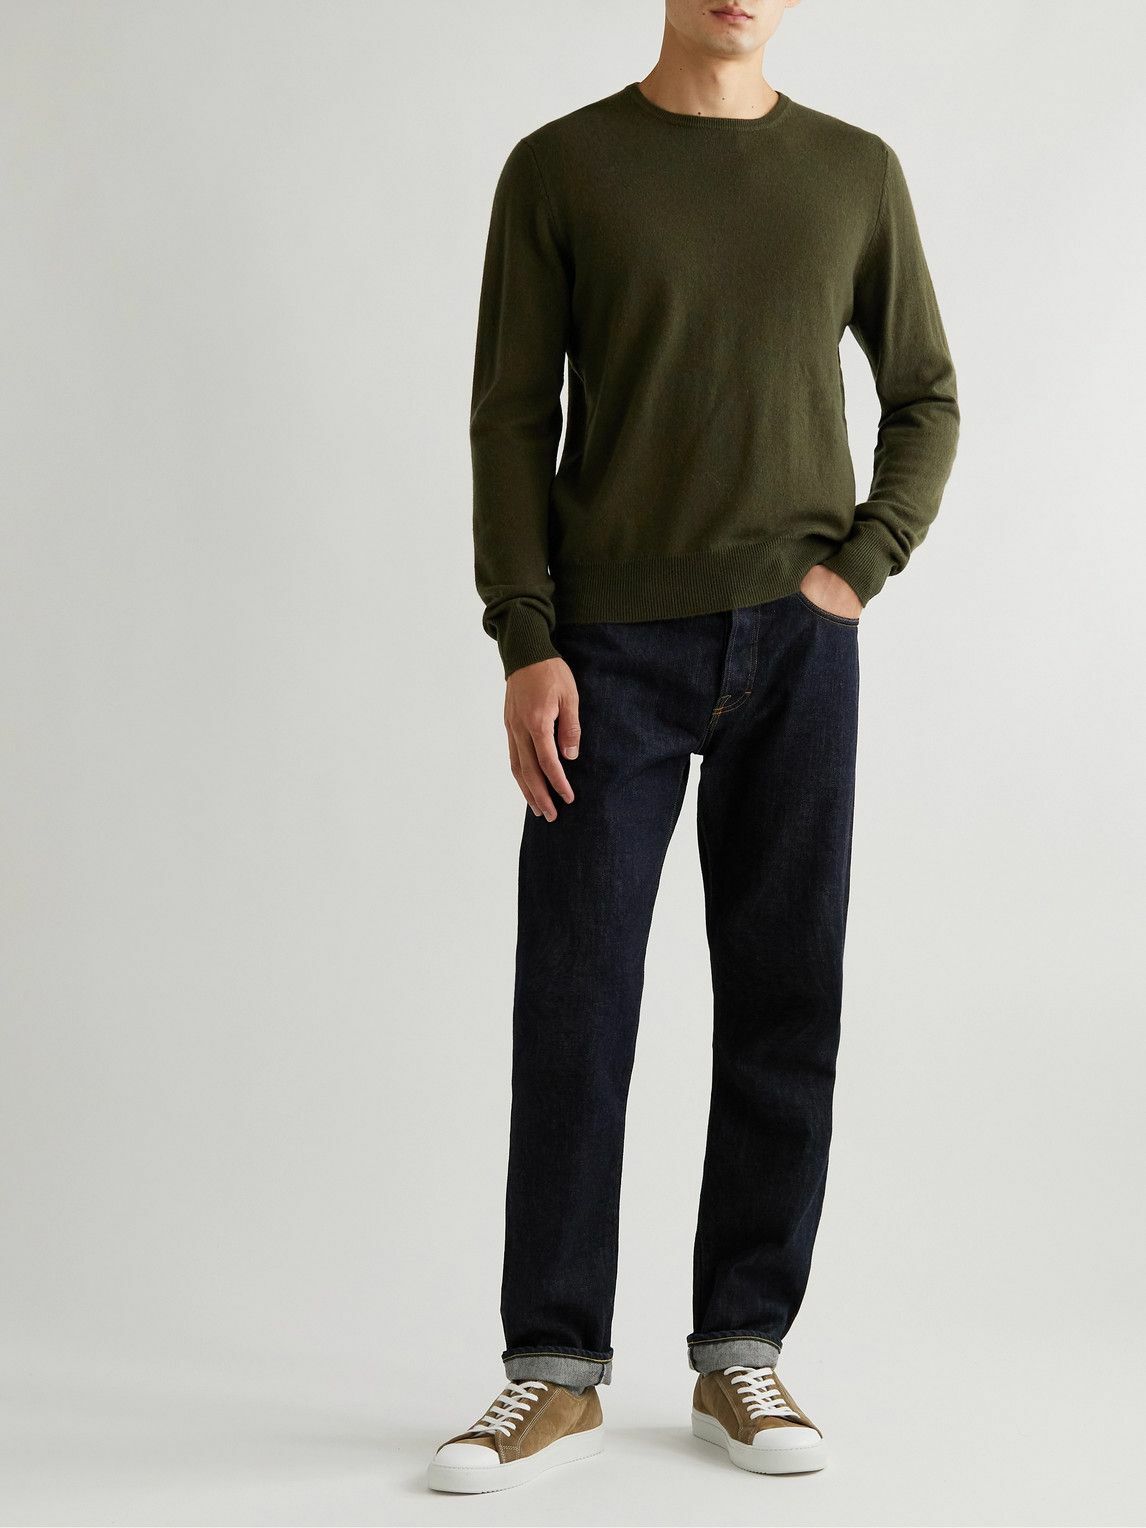 Allude - Cashmere Sweater - Green